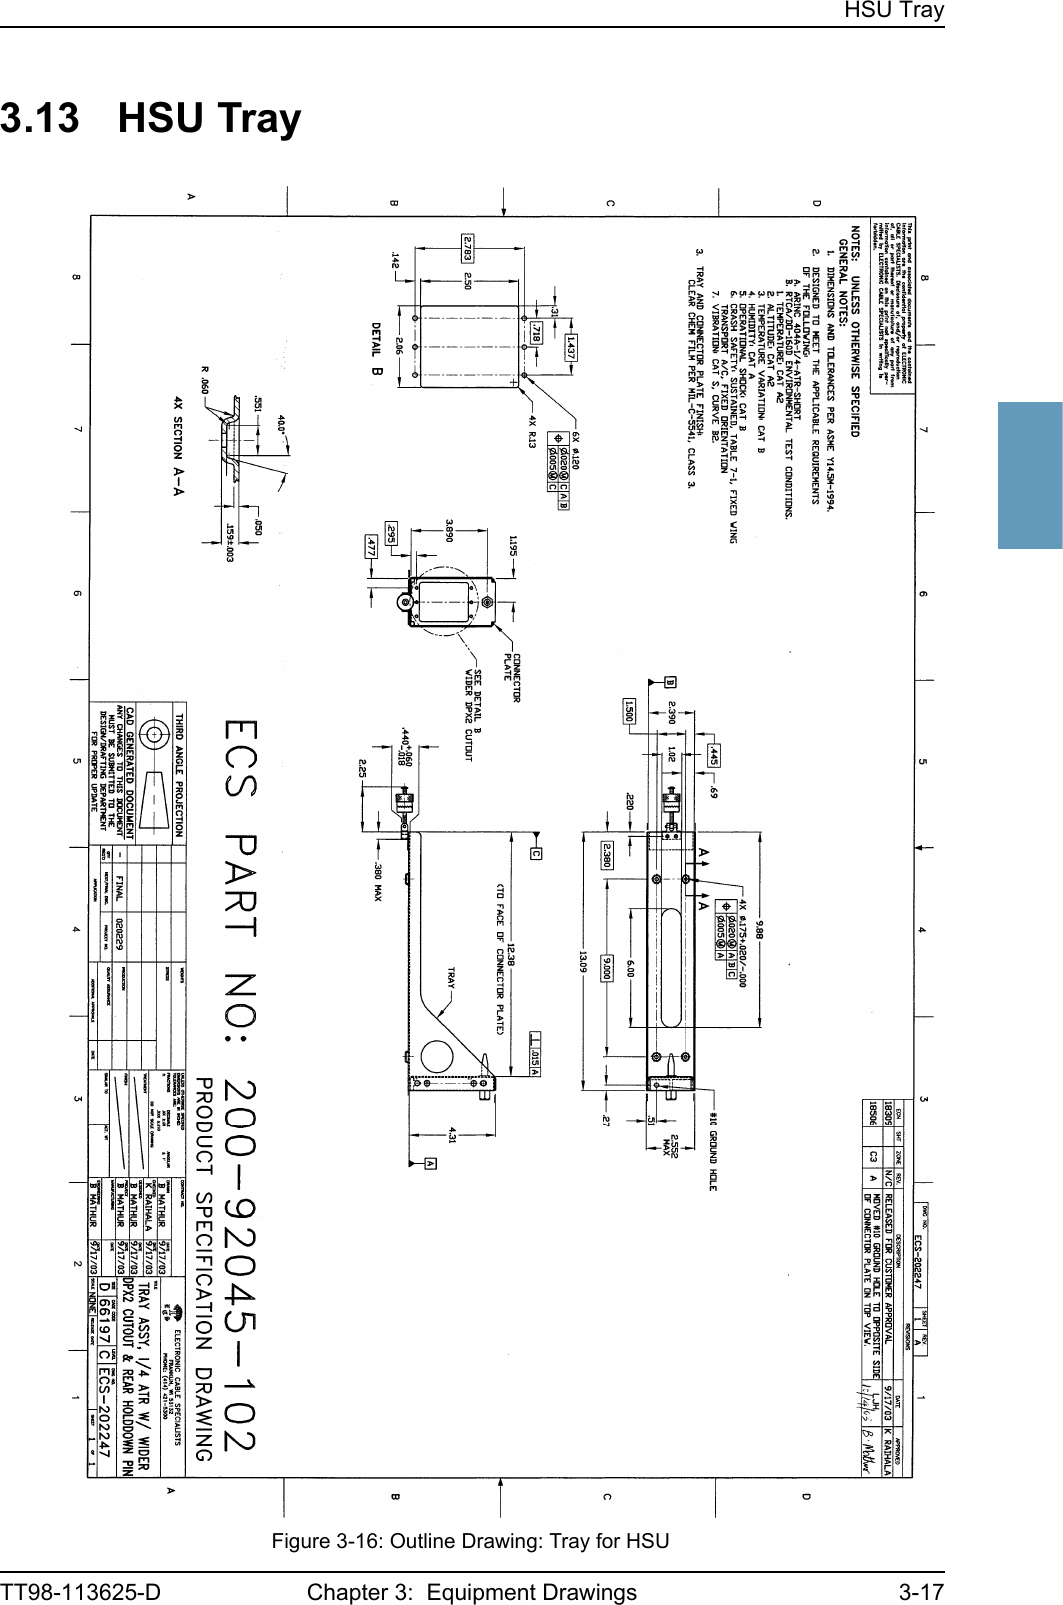 HSU TrayTT98-113625-D Chapter 3:  Equipment Drawings 3-1733333.13 HSU TrayFigure 3-16: Outline Drawing: Tray for HSU